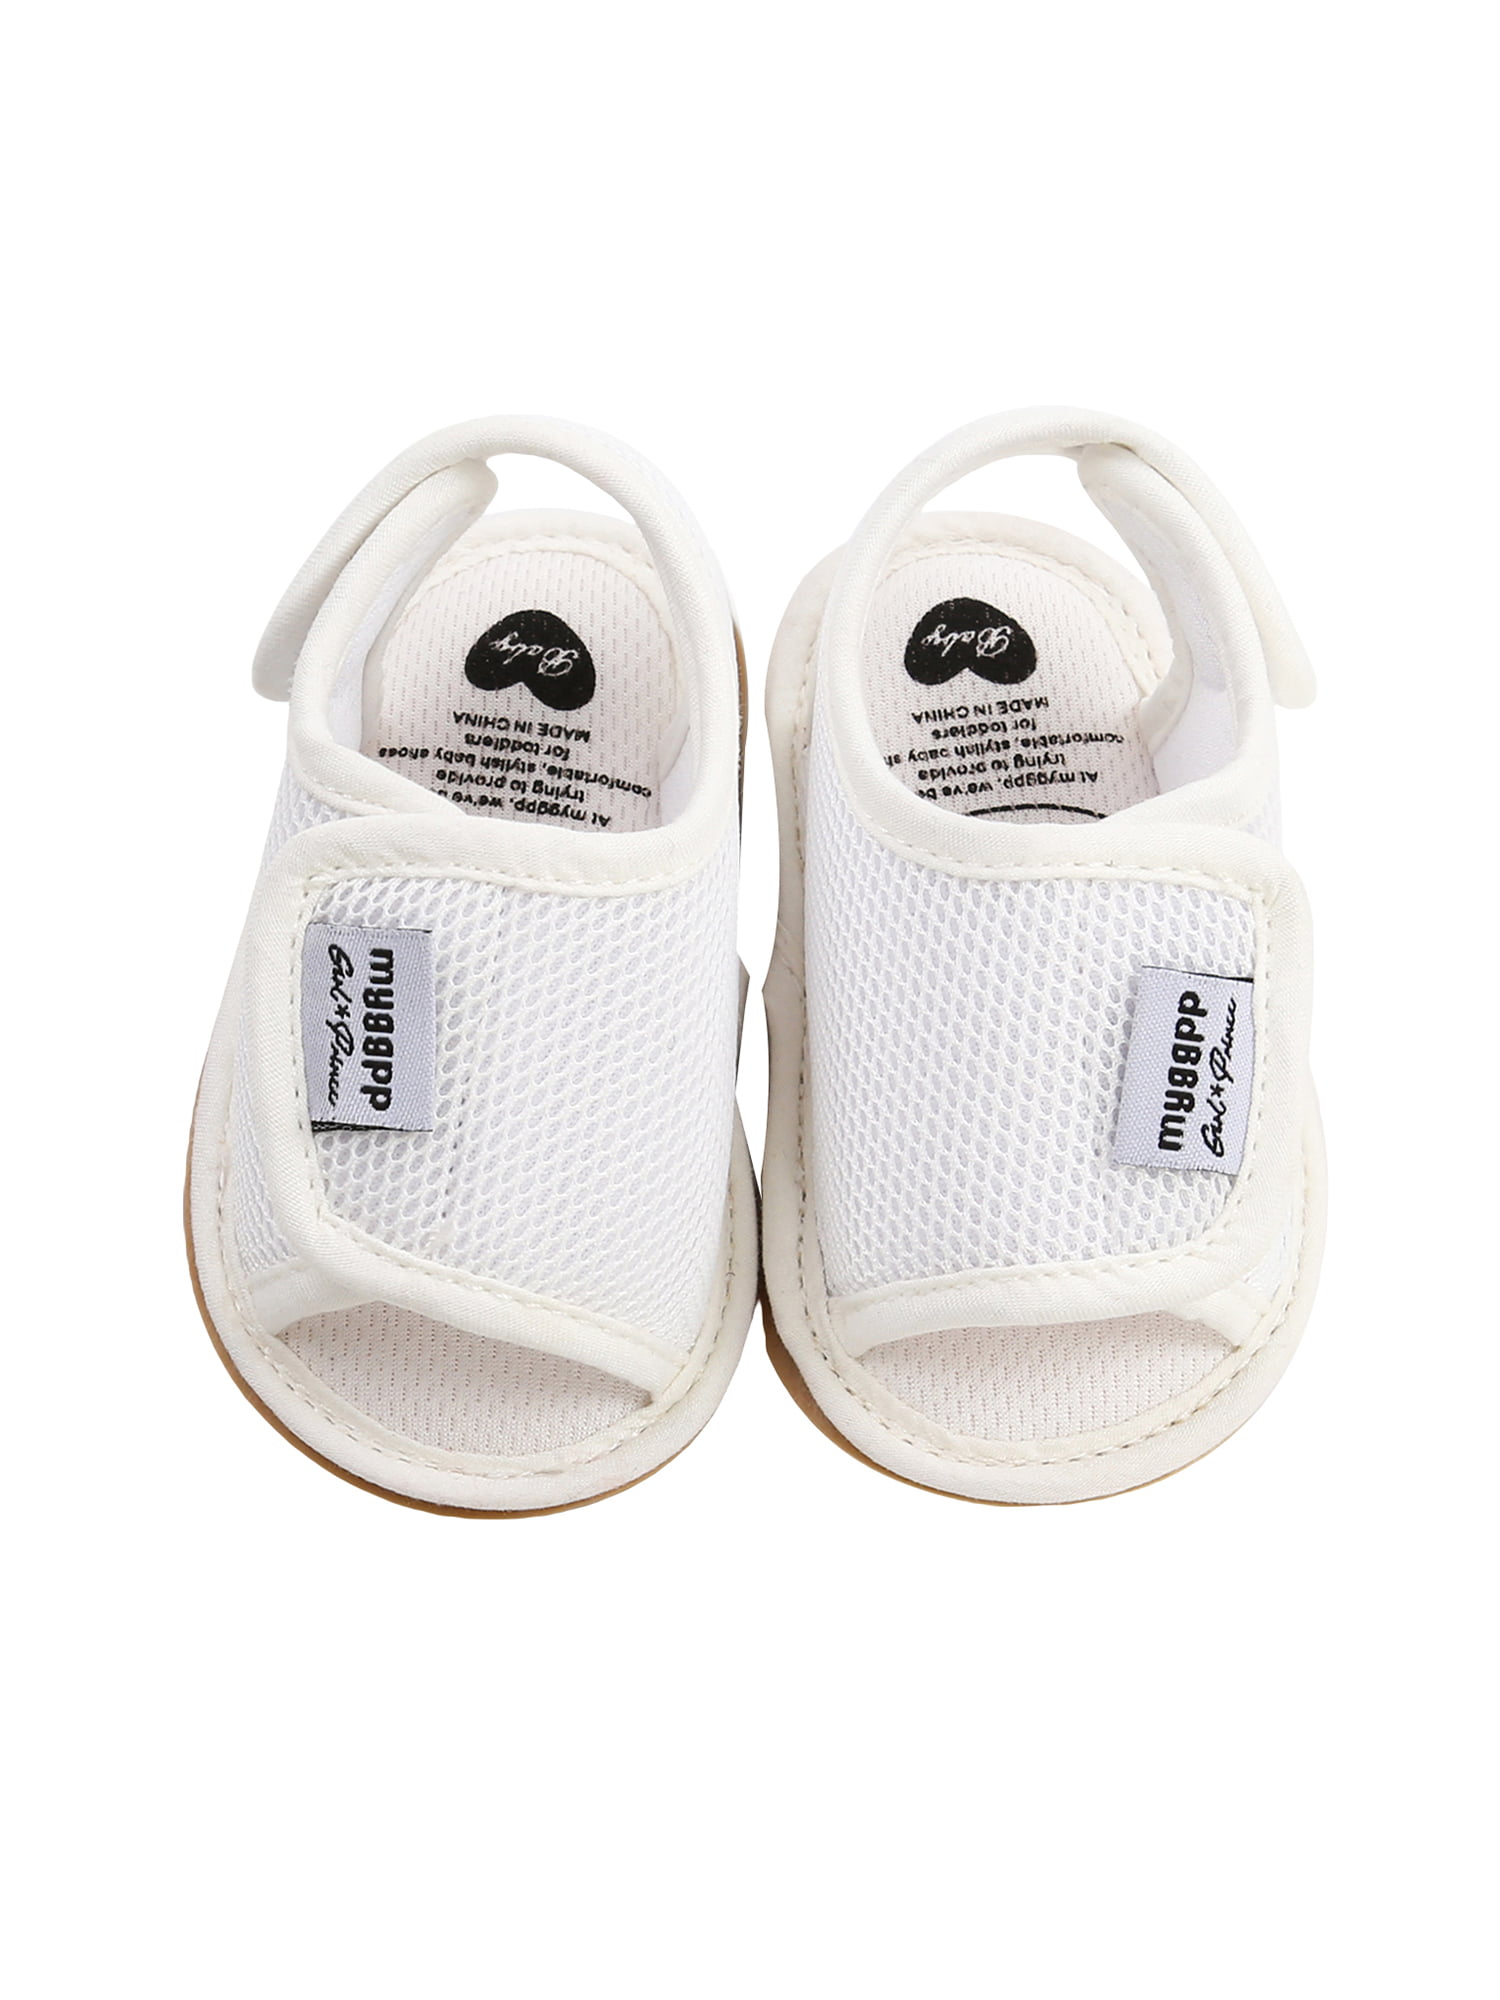 Infant Toddler Boys Girls Baby Shoes Soft Bottom Anti-skid Mesh Hole 0-18 months 